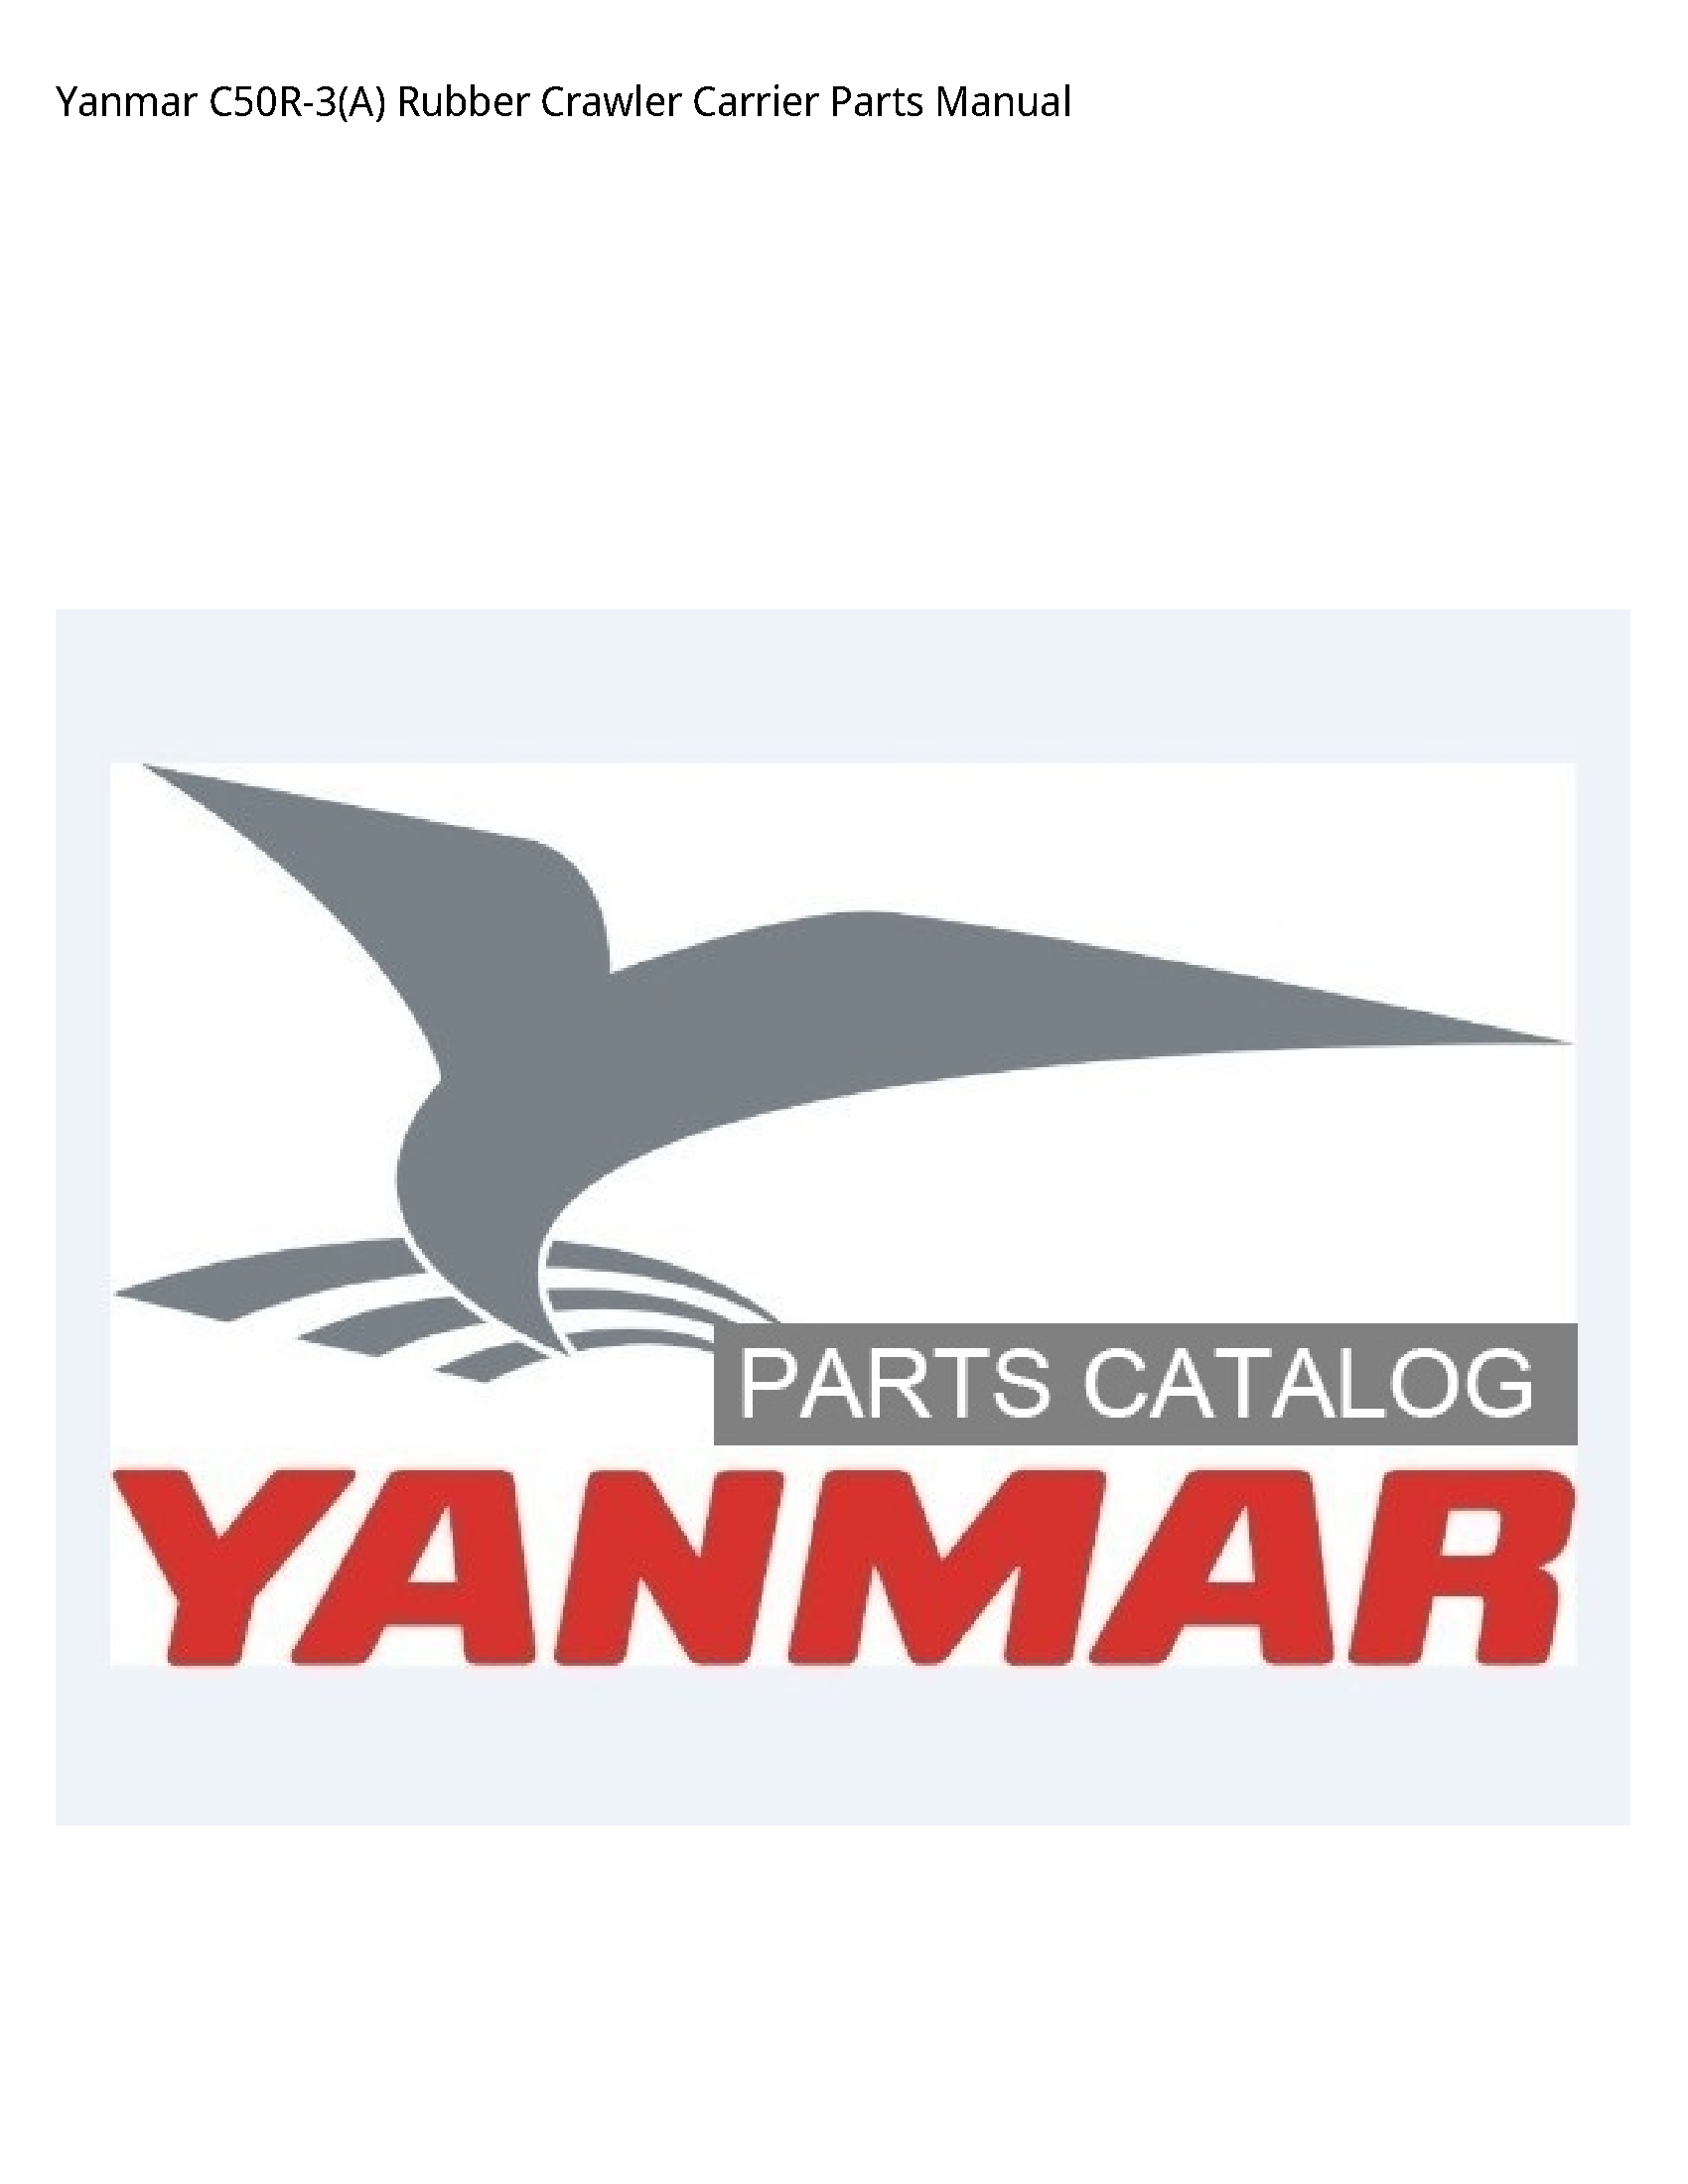 Yanmar C50R-3(A) Rubber Crawler Carrier Parts manual